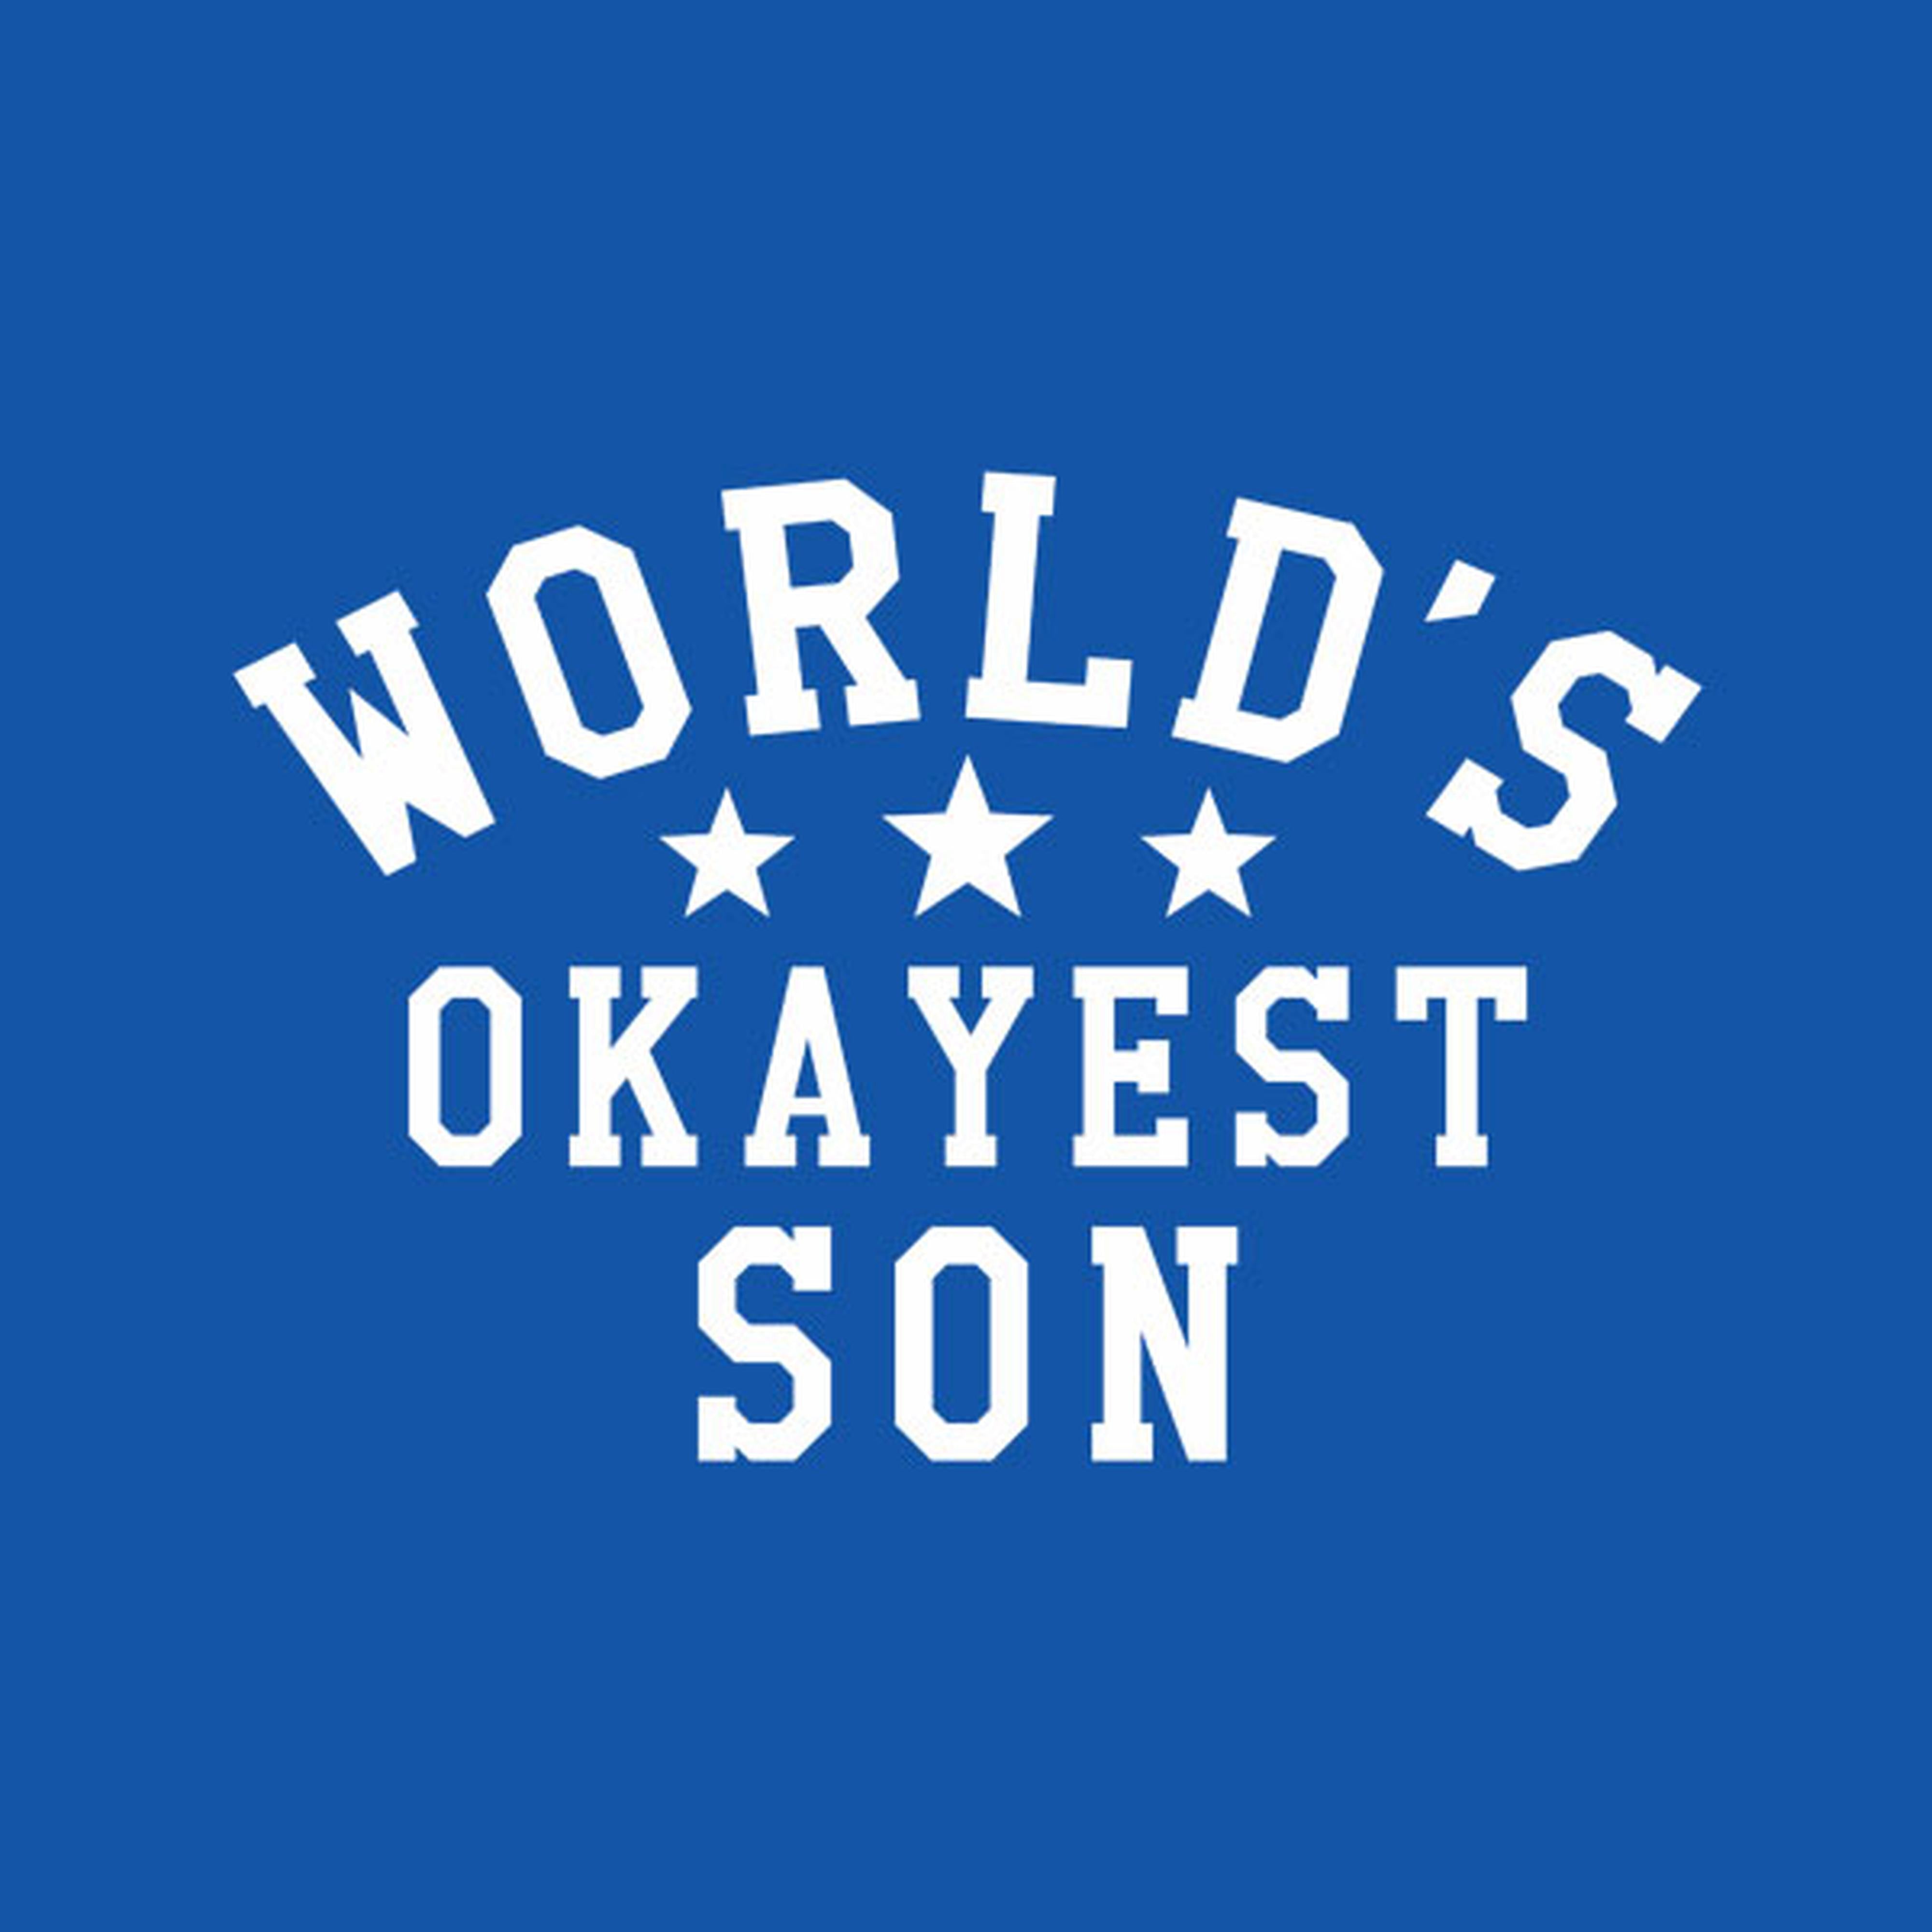 World's Okayest Son